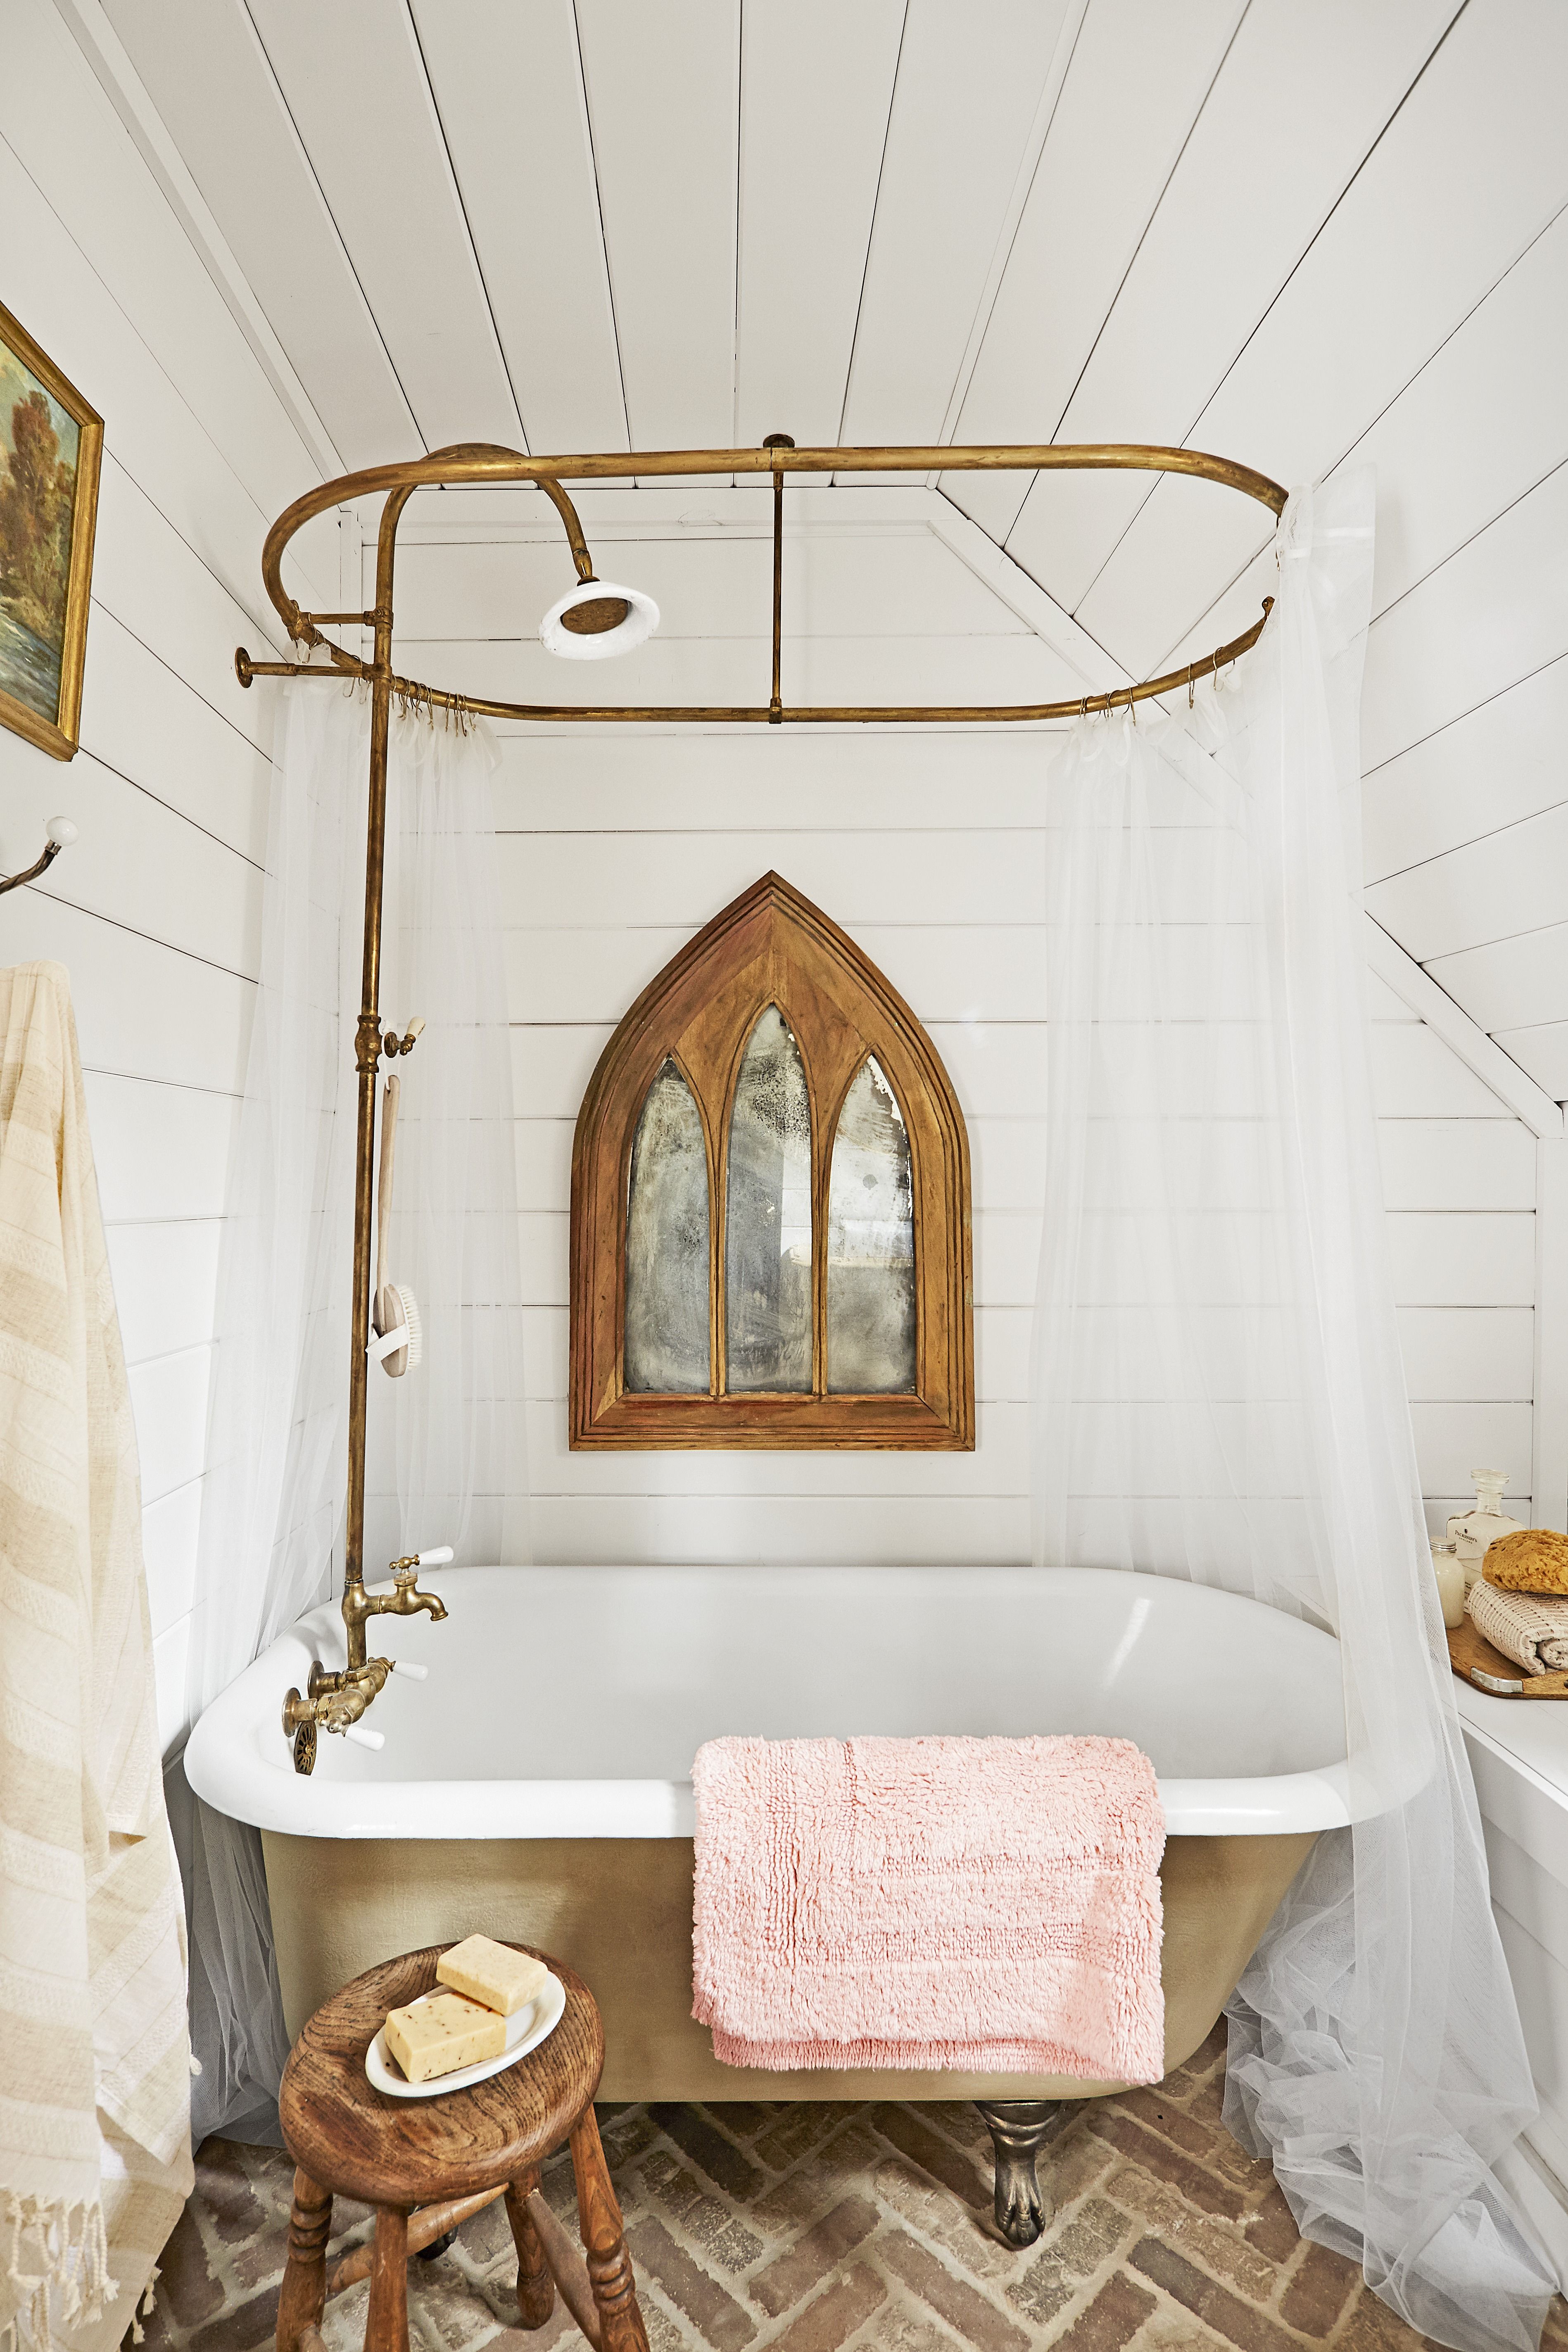 Clawfoot Tub Ideas For Your Bathroom, Clawfoot Bathtub Shower Fixtures